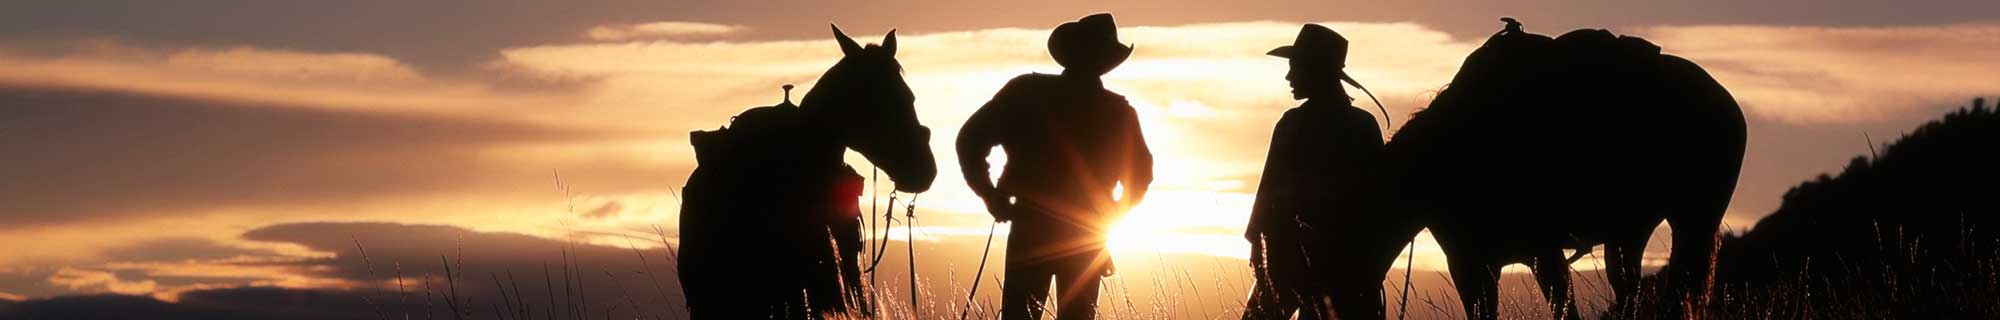 sunset cowboys